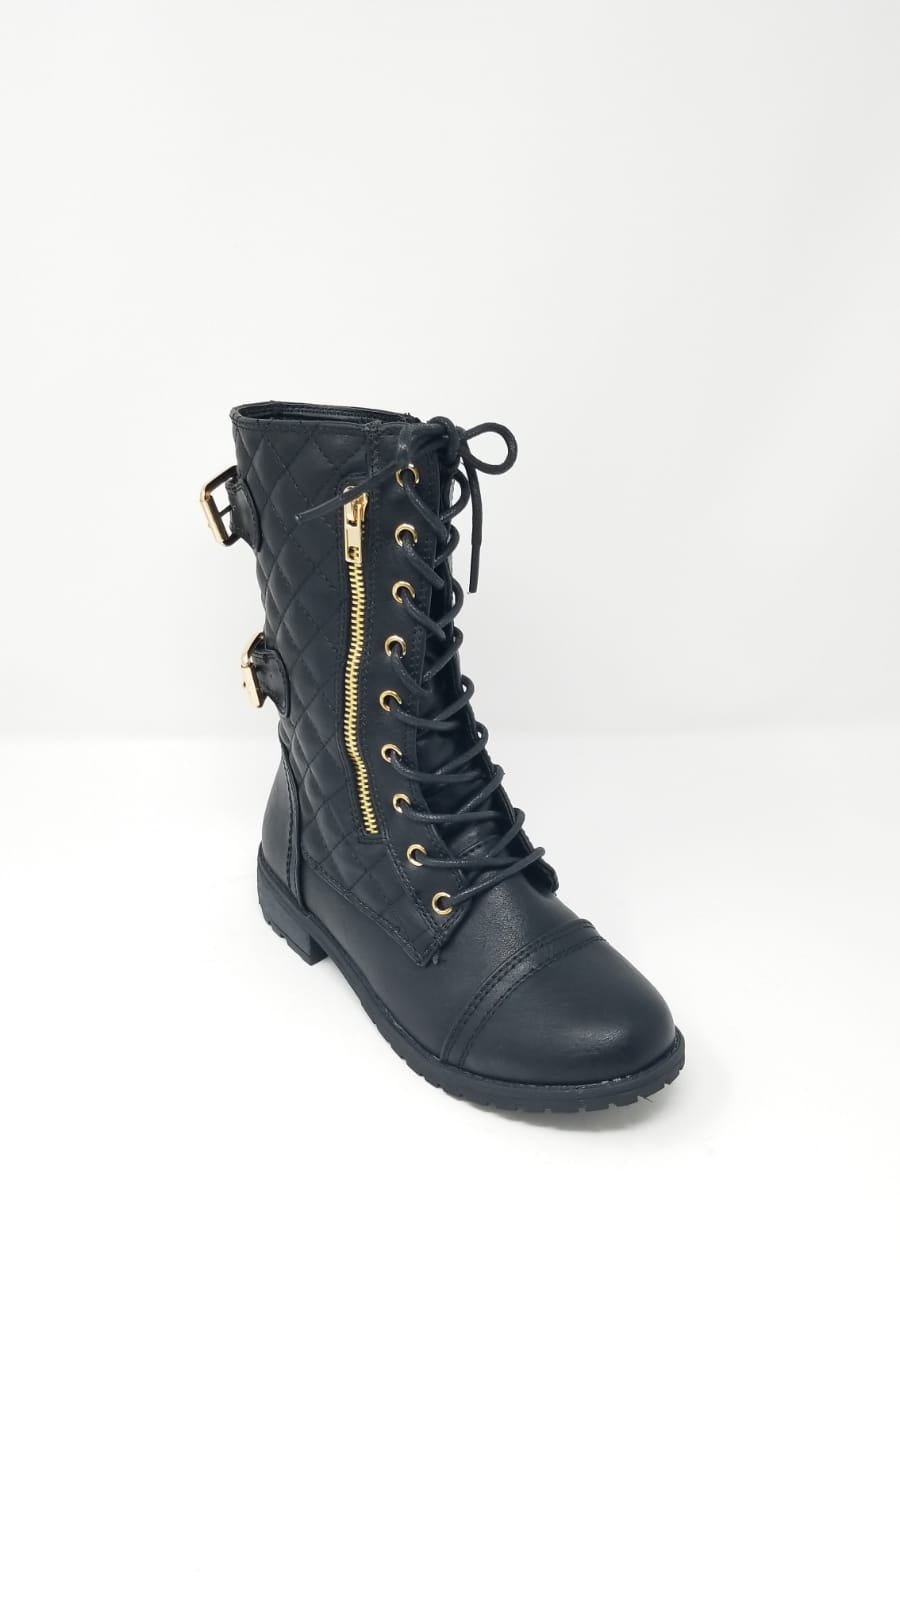 Stylish Combat Boots